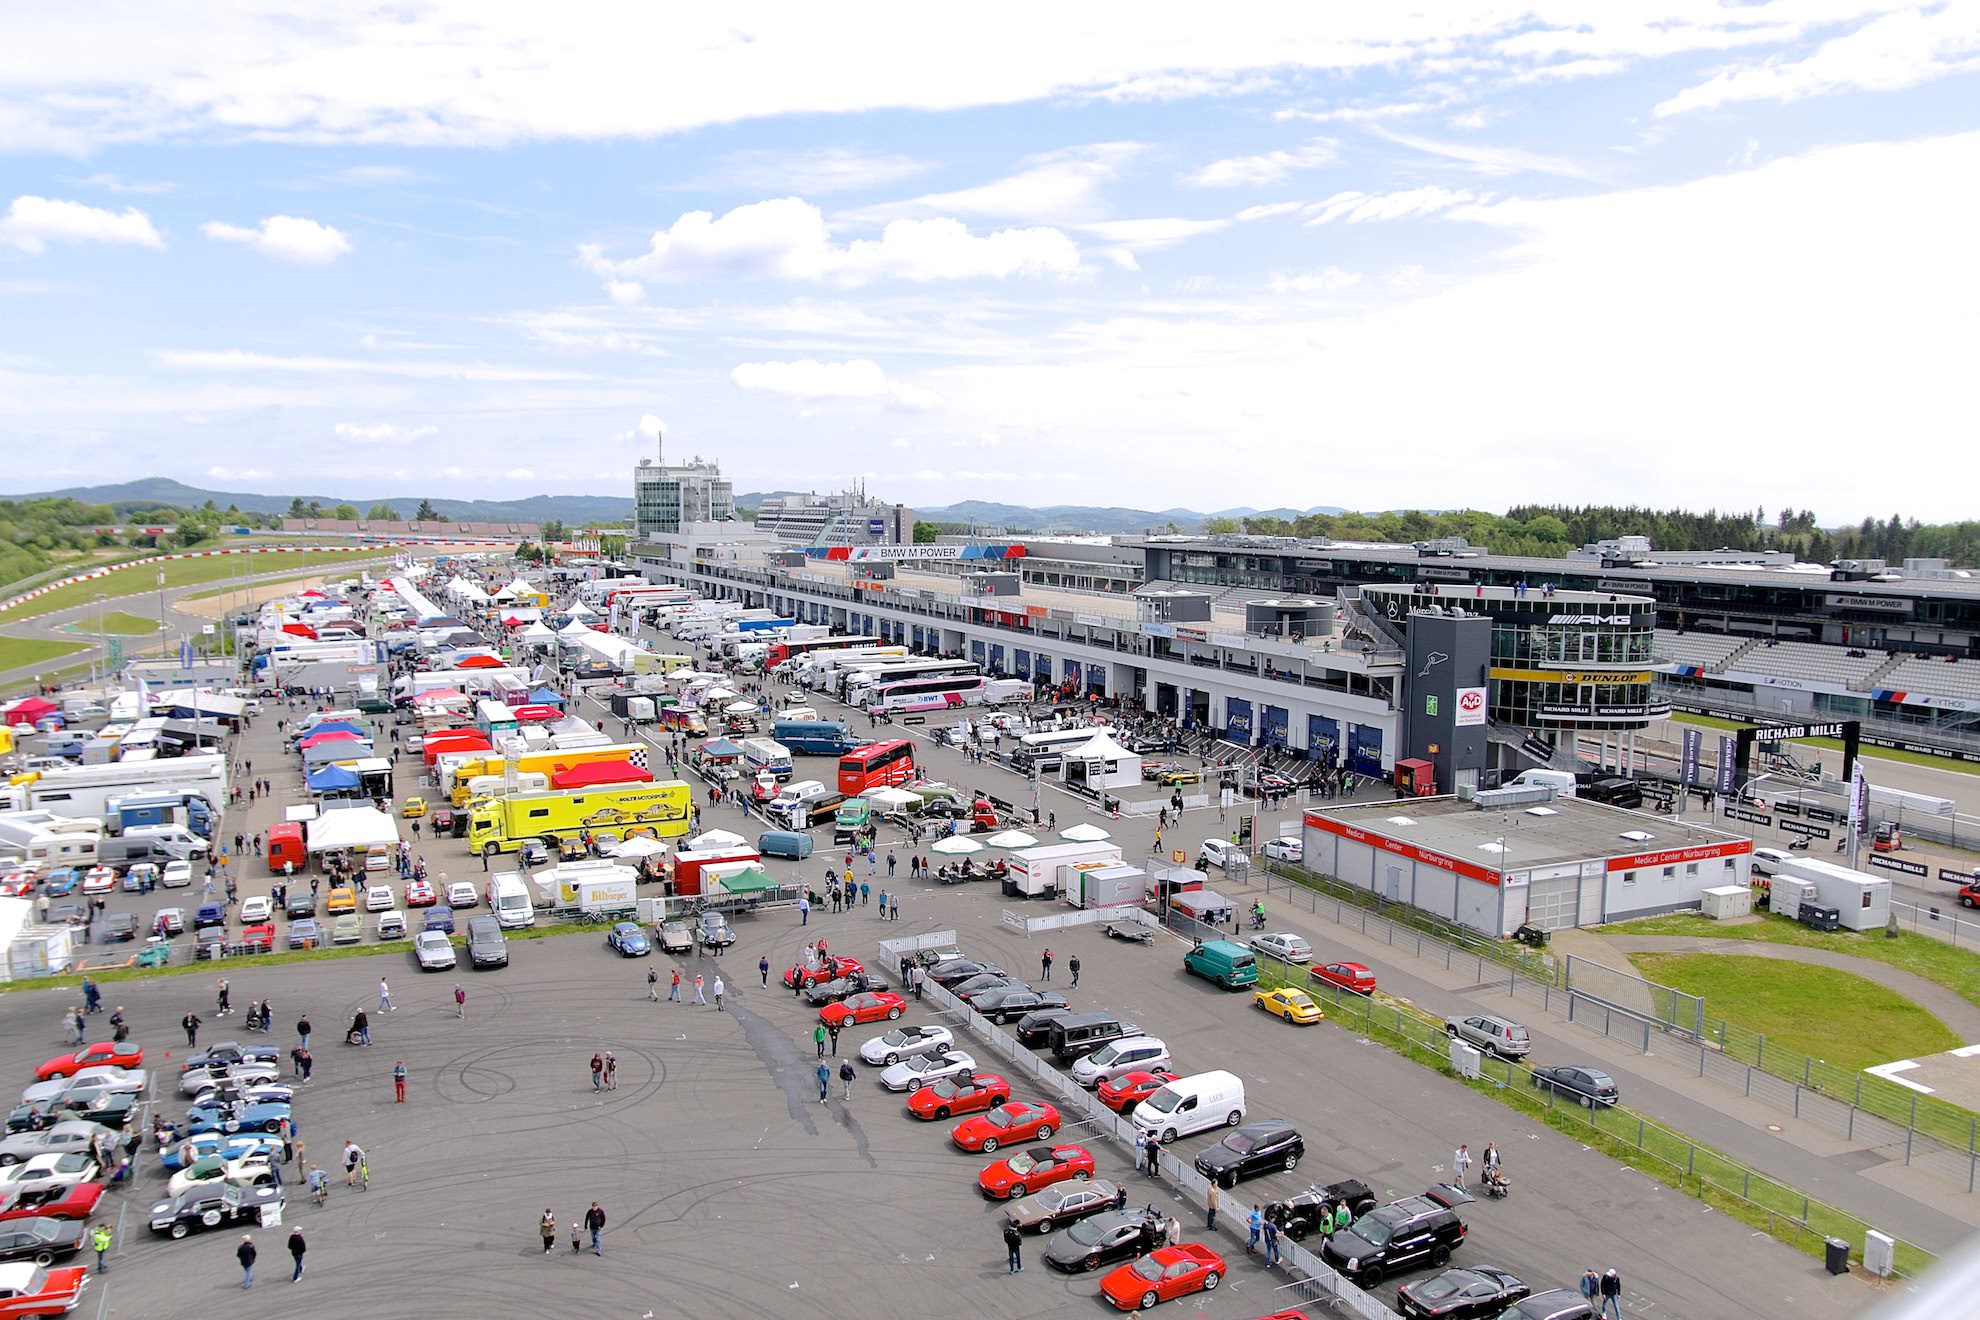 Richard Mille Nürburgring Classic 2019